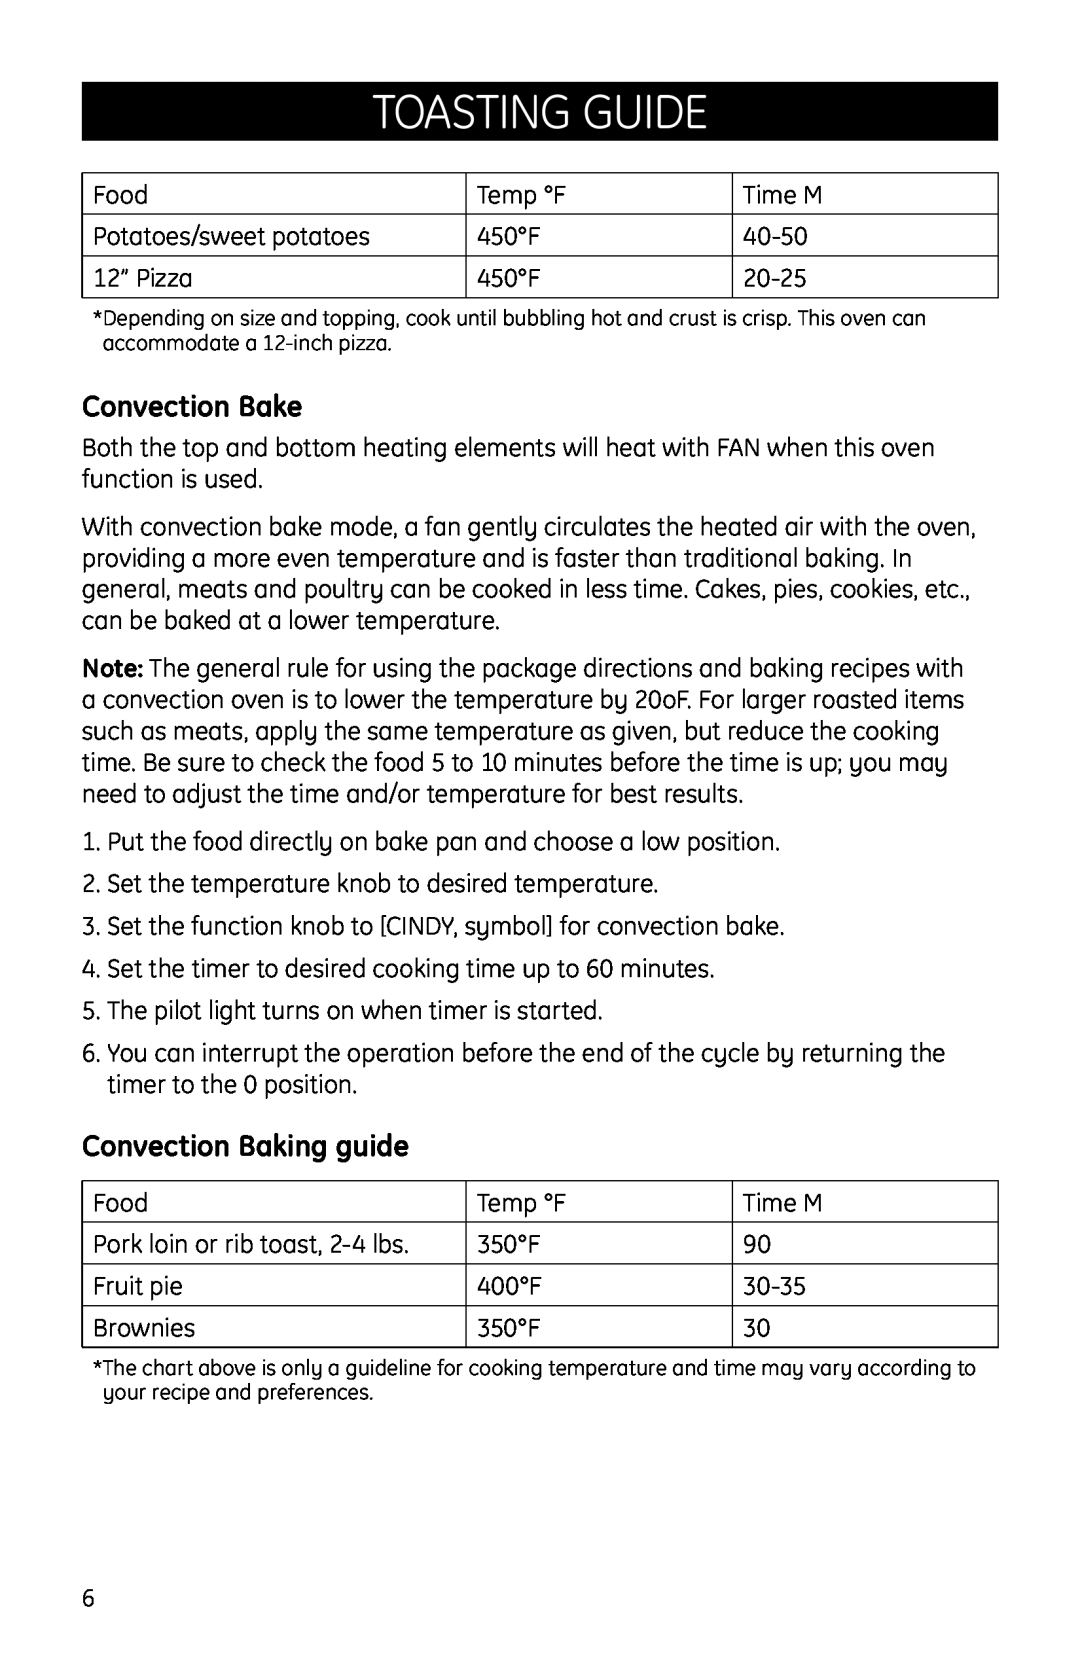 GE Countertop Oven manual Toasting Guide, Convection Bake, Convection Baking guide 